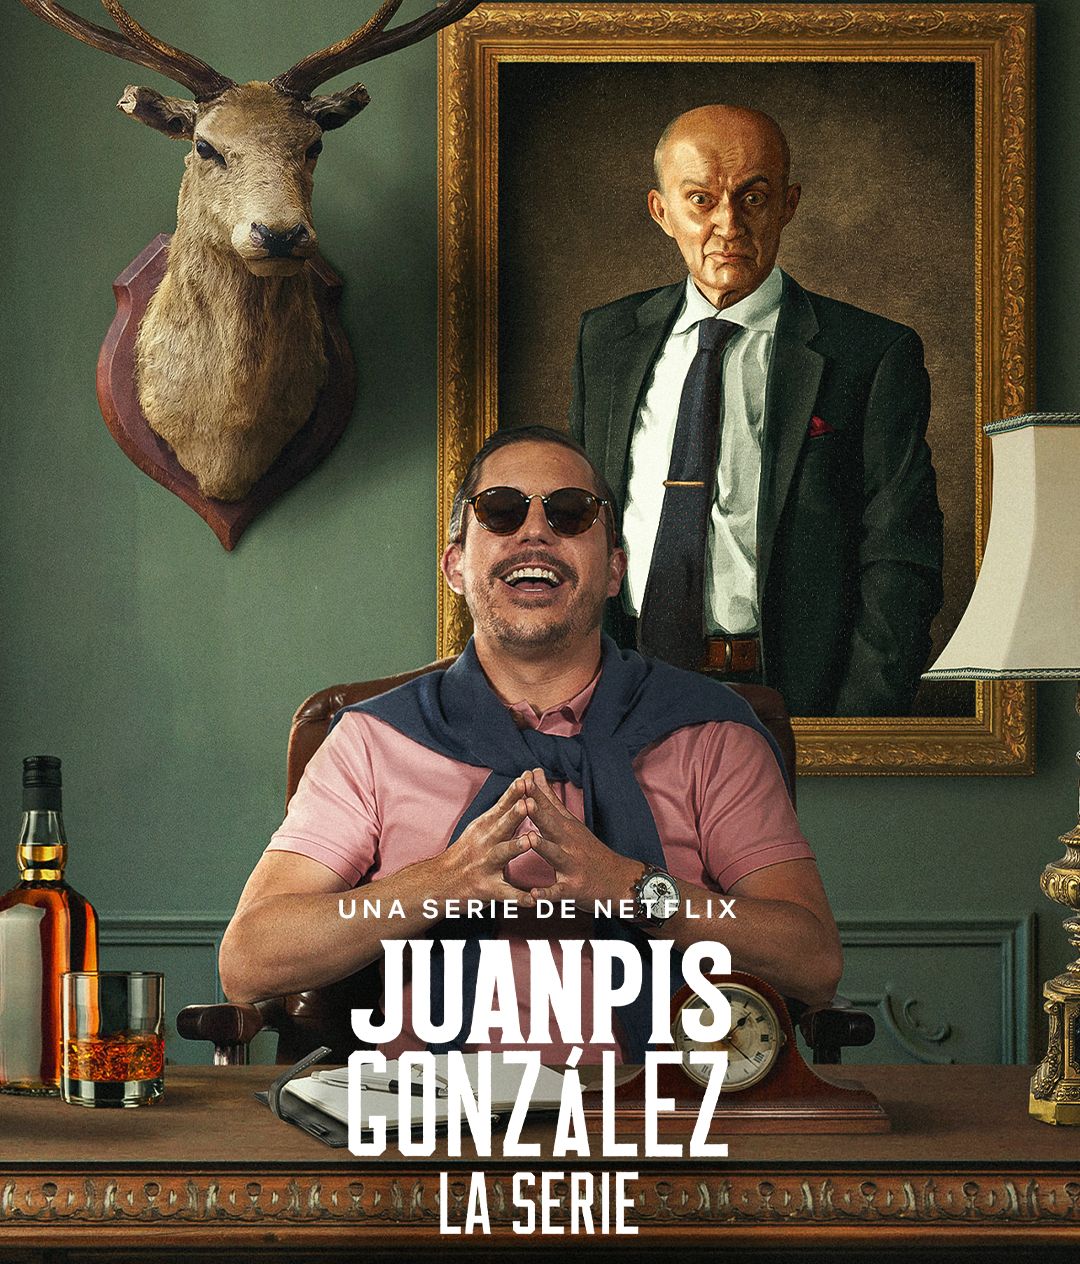 Is “Juanpis González – The Series” on Netflix